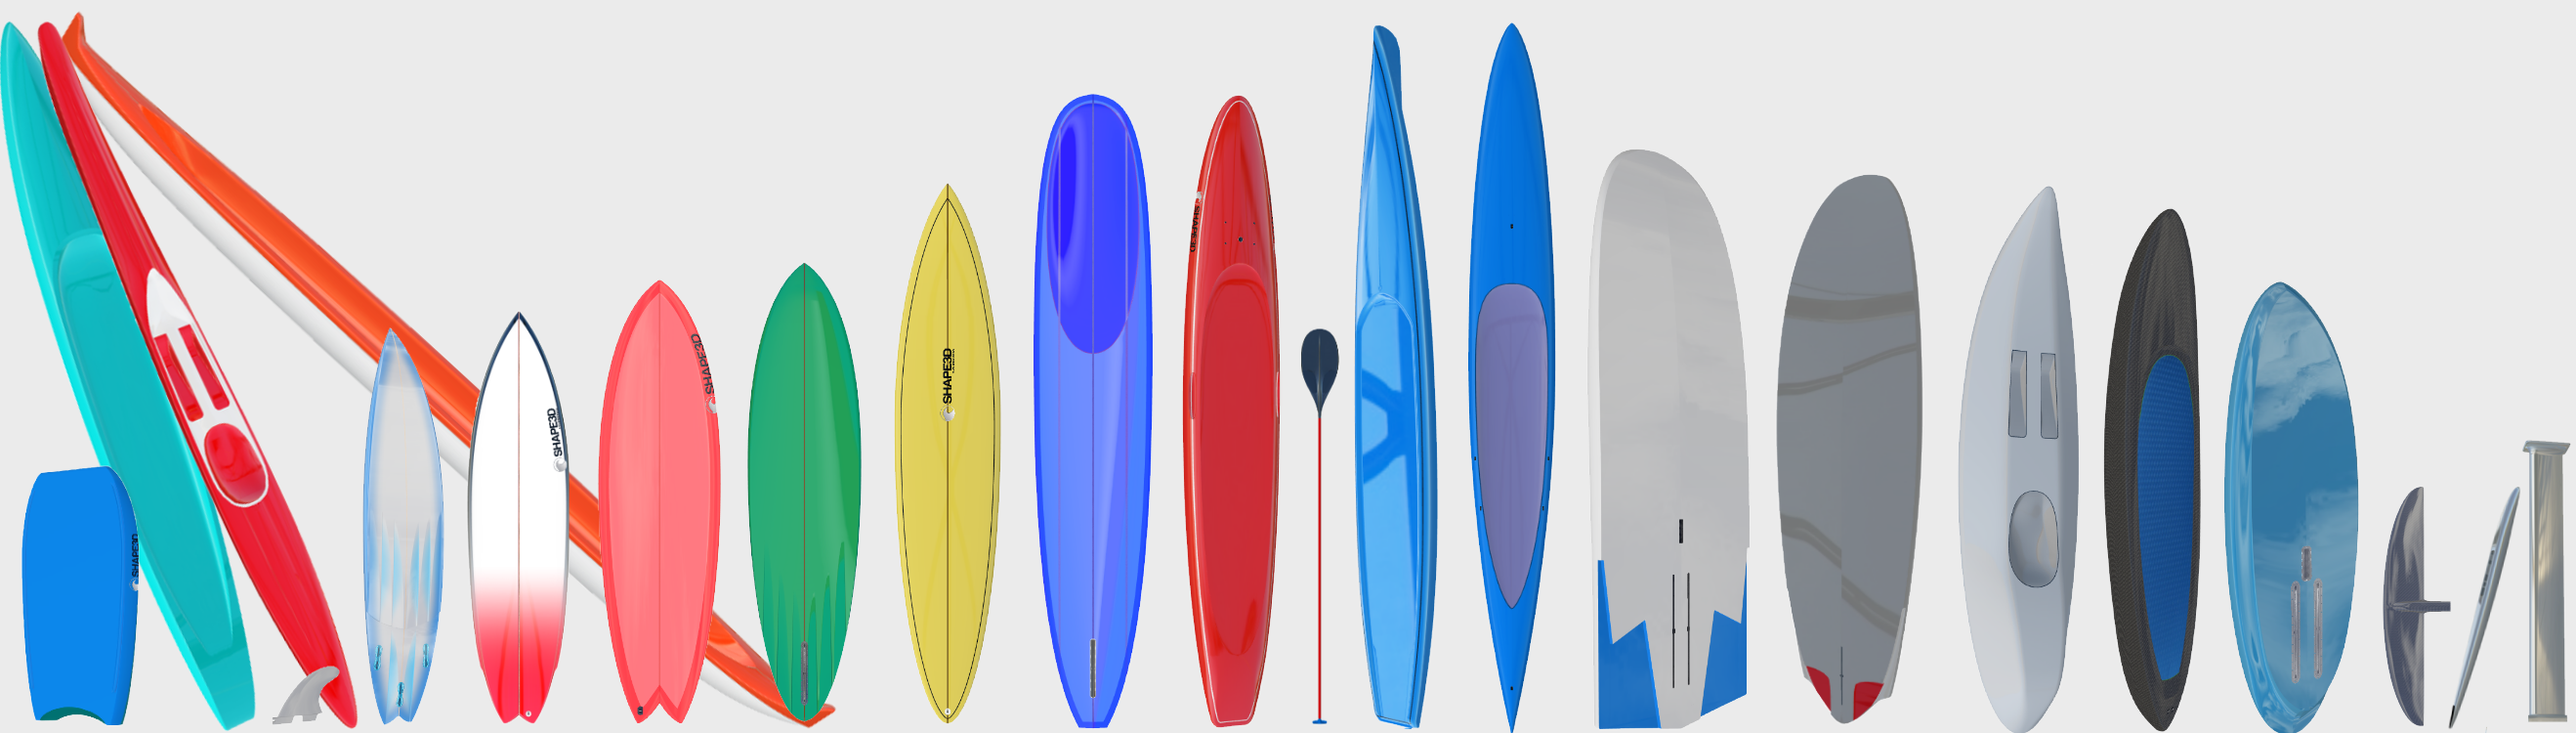 Measuring tape (inch / cm) - 3 meters long - Surfboard shaping